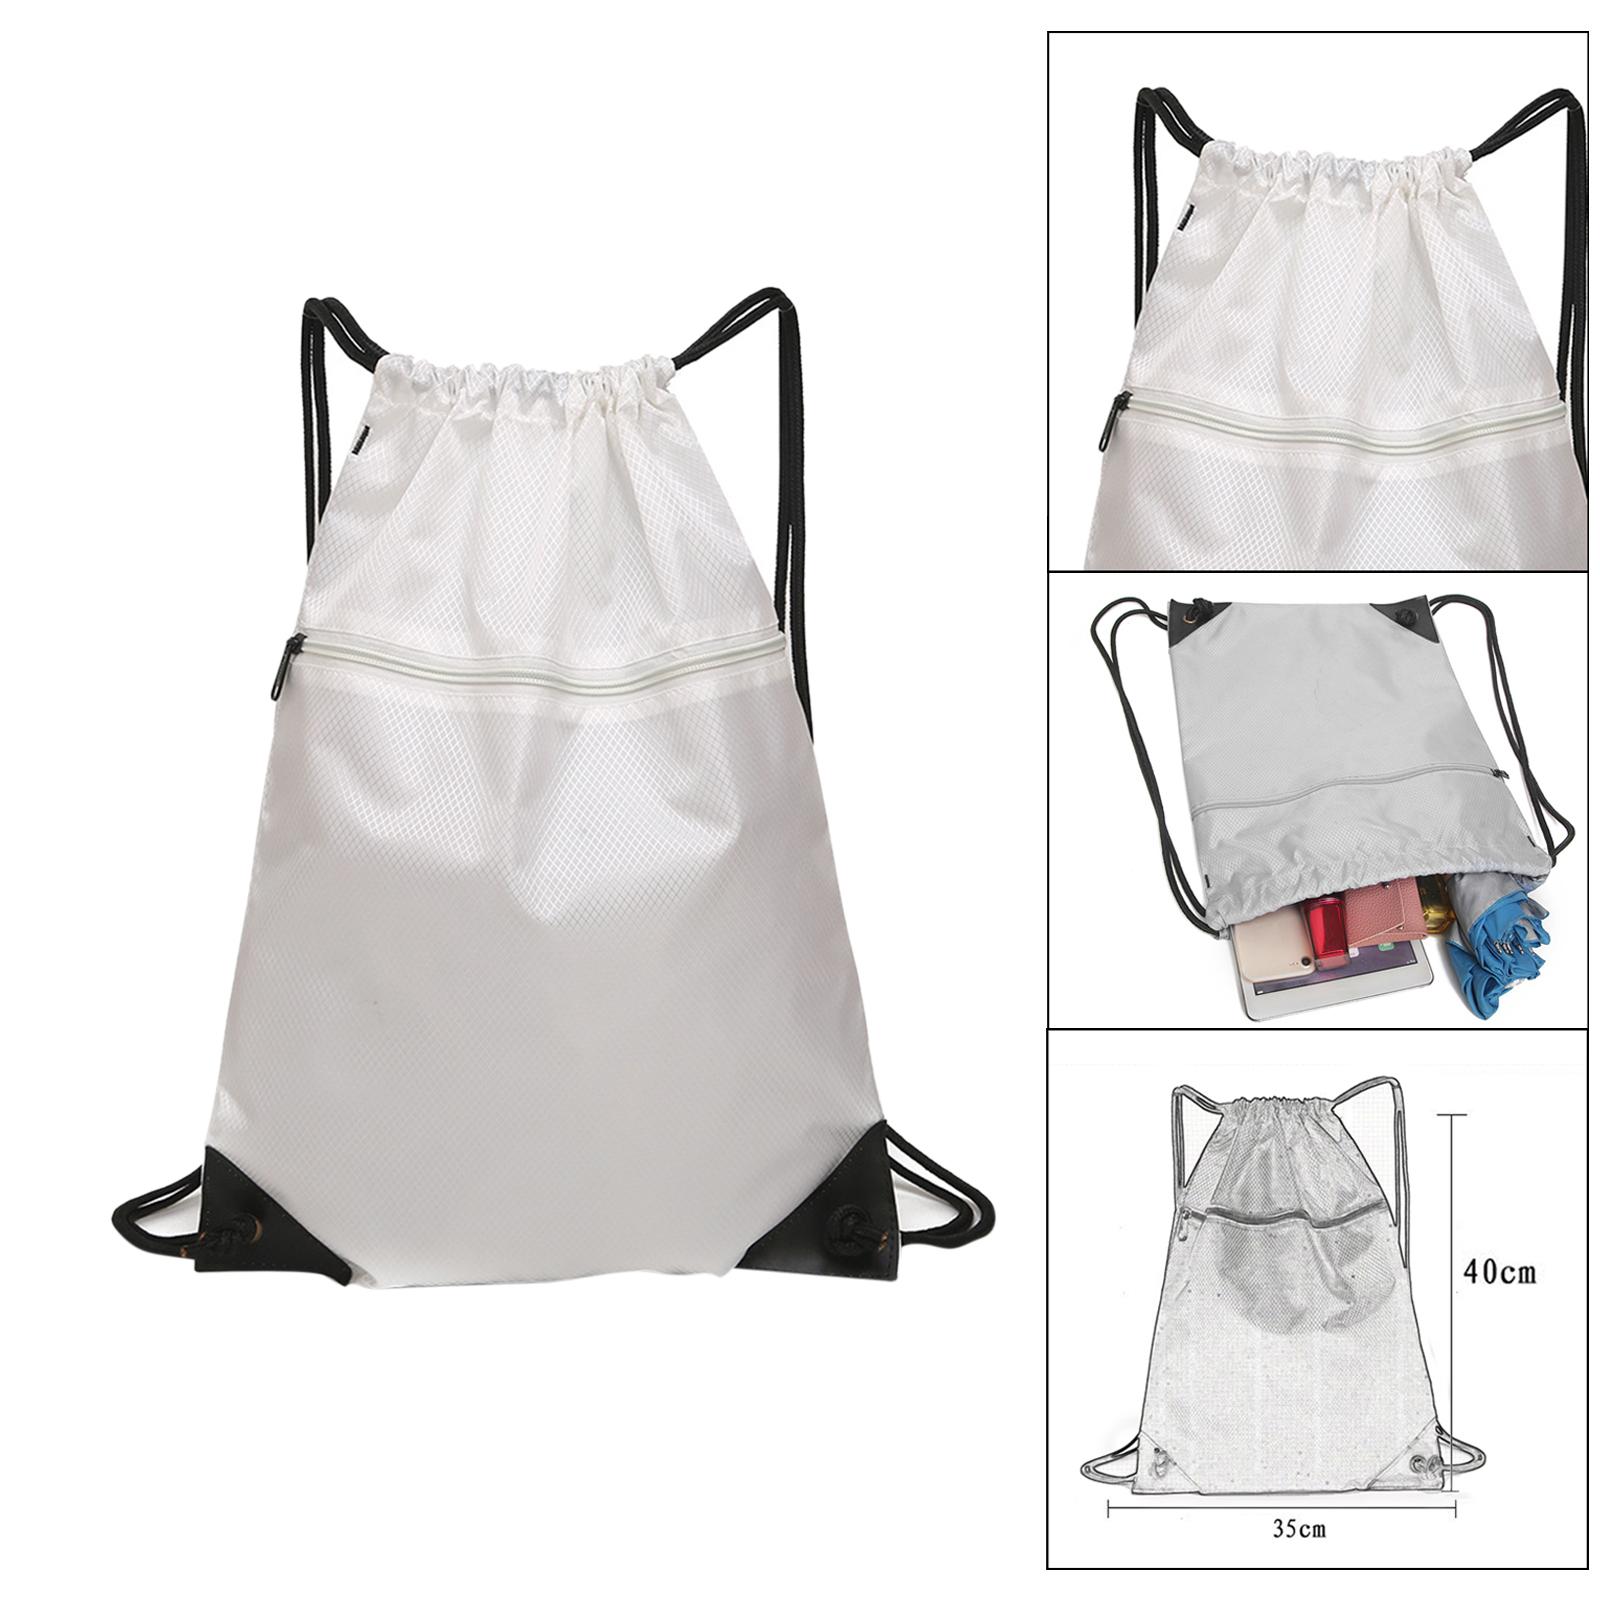 Travel Nylon Drawstring Bag Sack Beach Gym Backpack Shoes Bags White